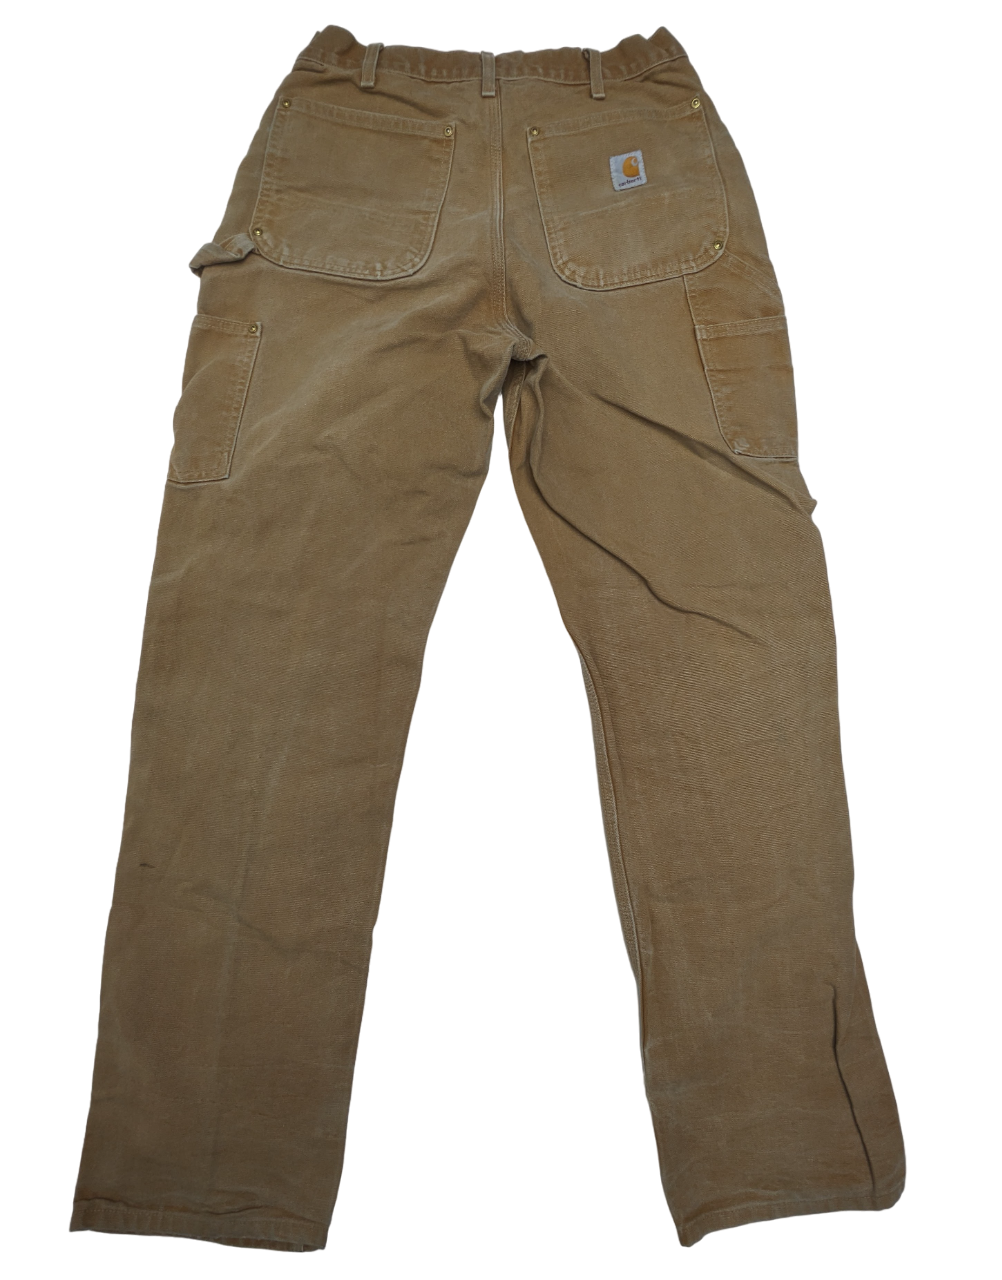 Carhartt Double Knee Jeans 1 pc 3 lbs D0417201-05